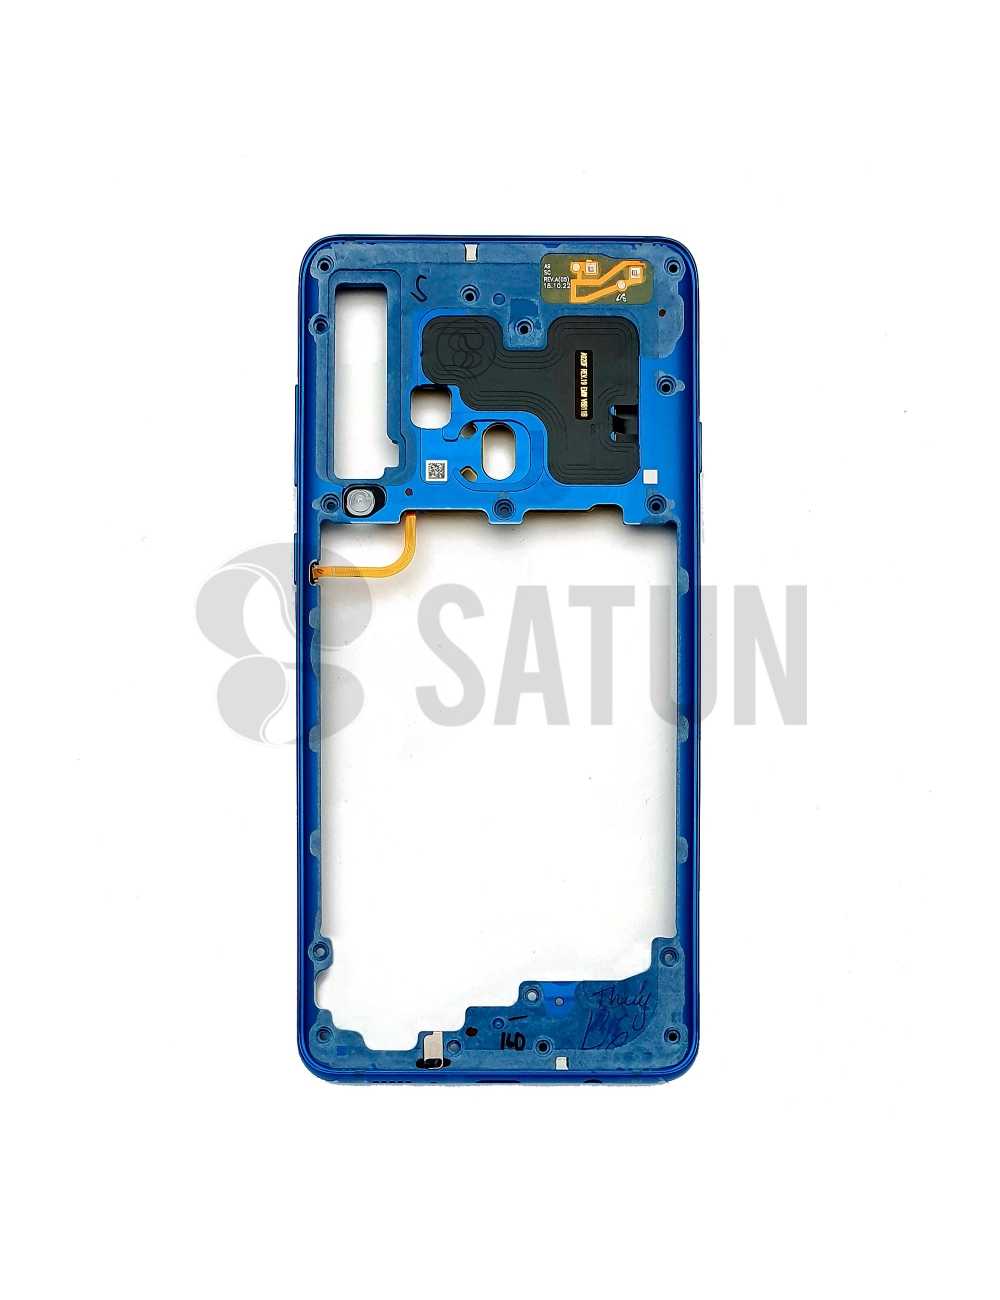 Carcasa intermedia Samsung Galaxy A9 2018 azul